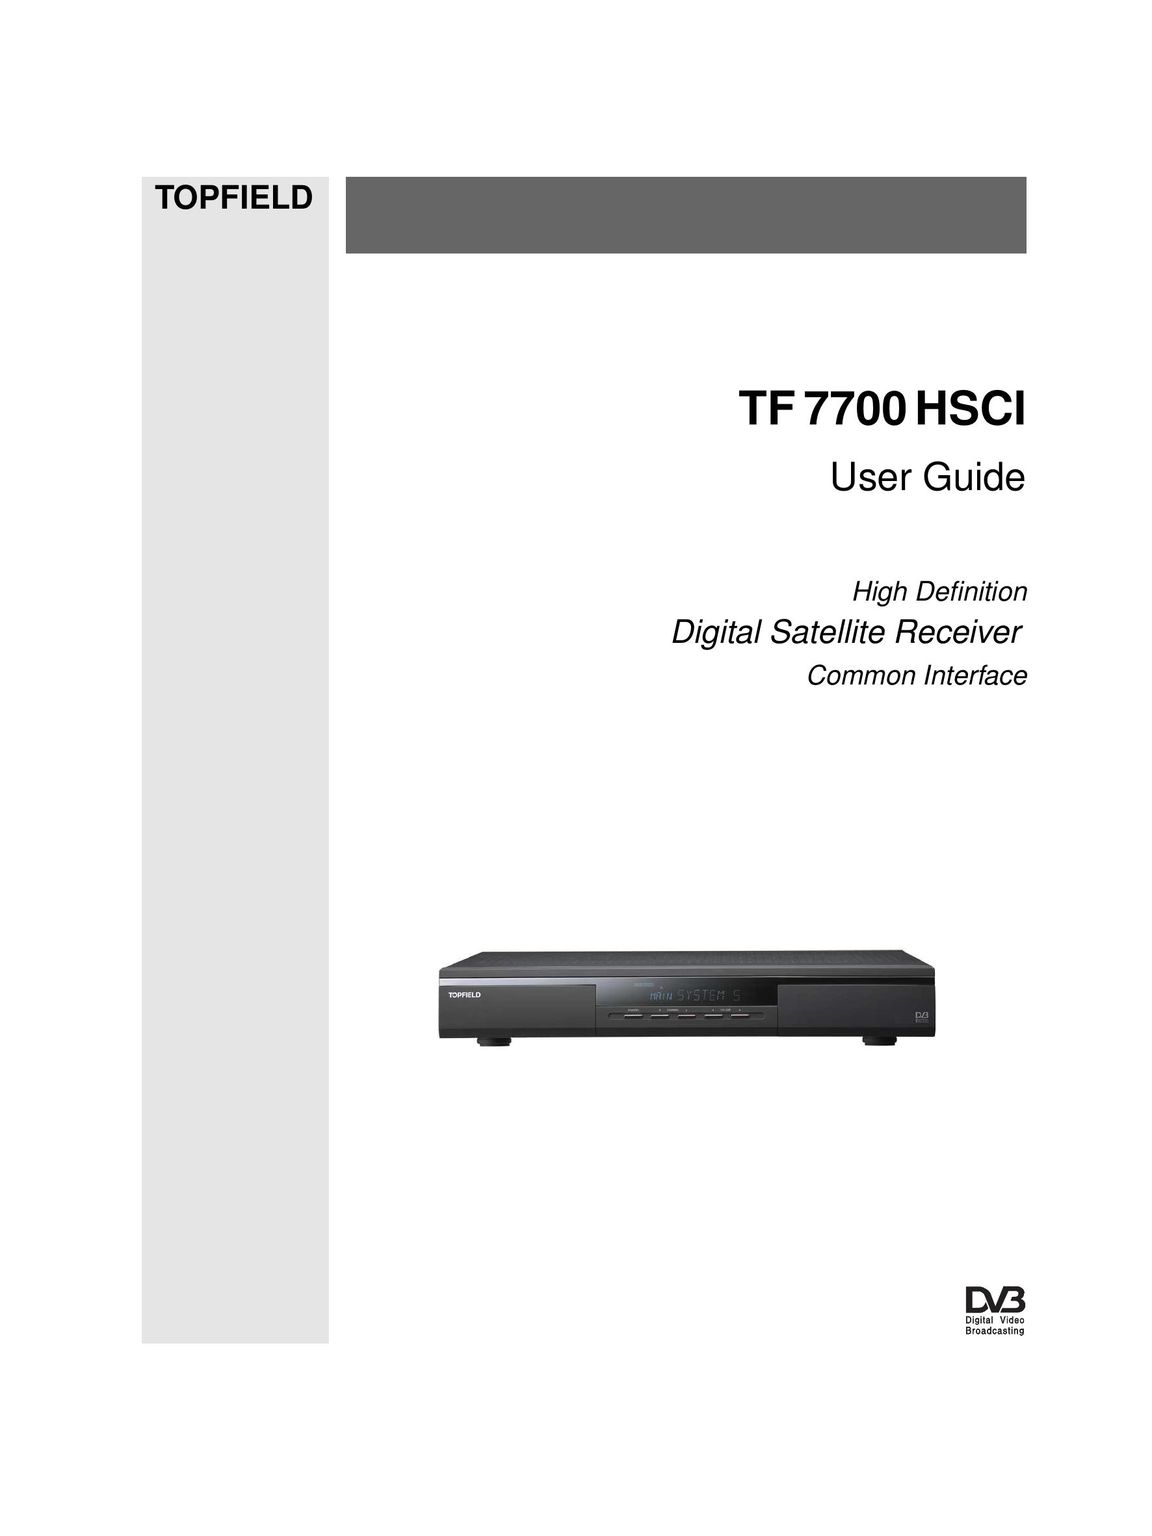 Topfield TF 7700 HSCI Satellite TV System User Manual